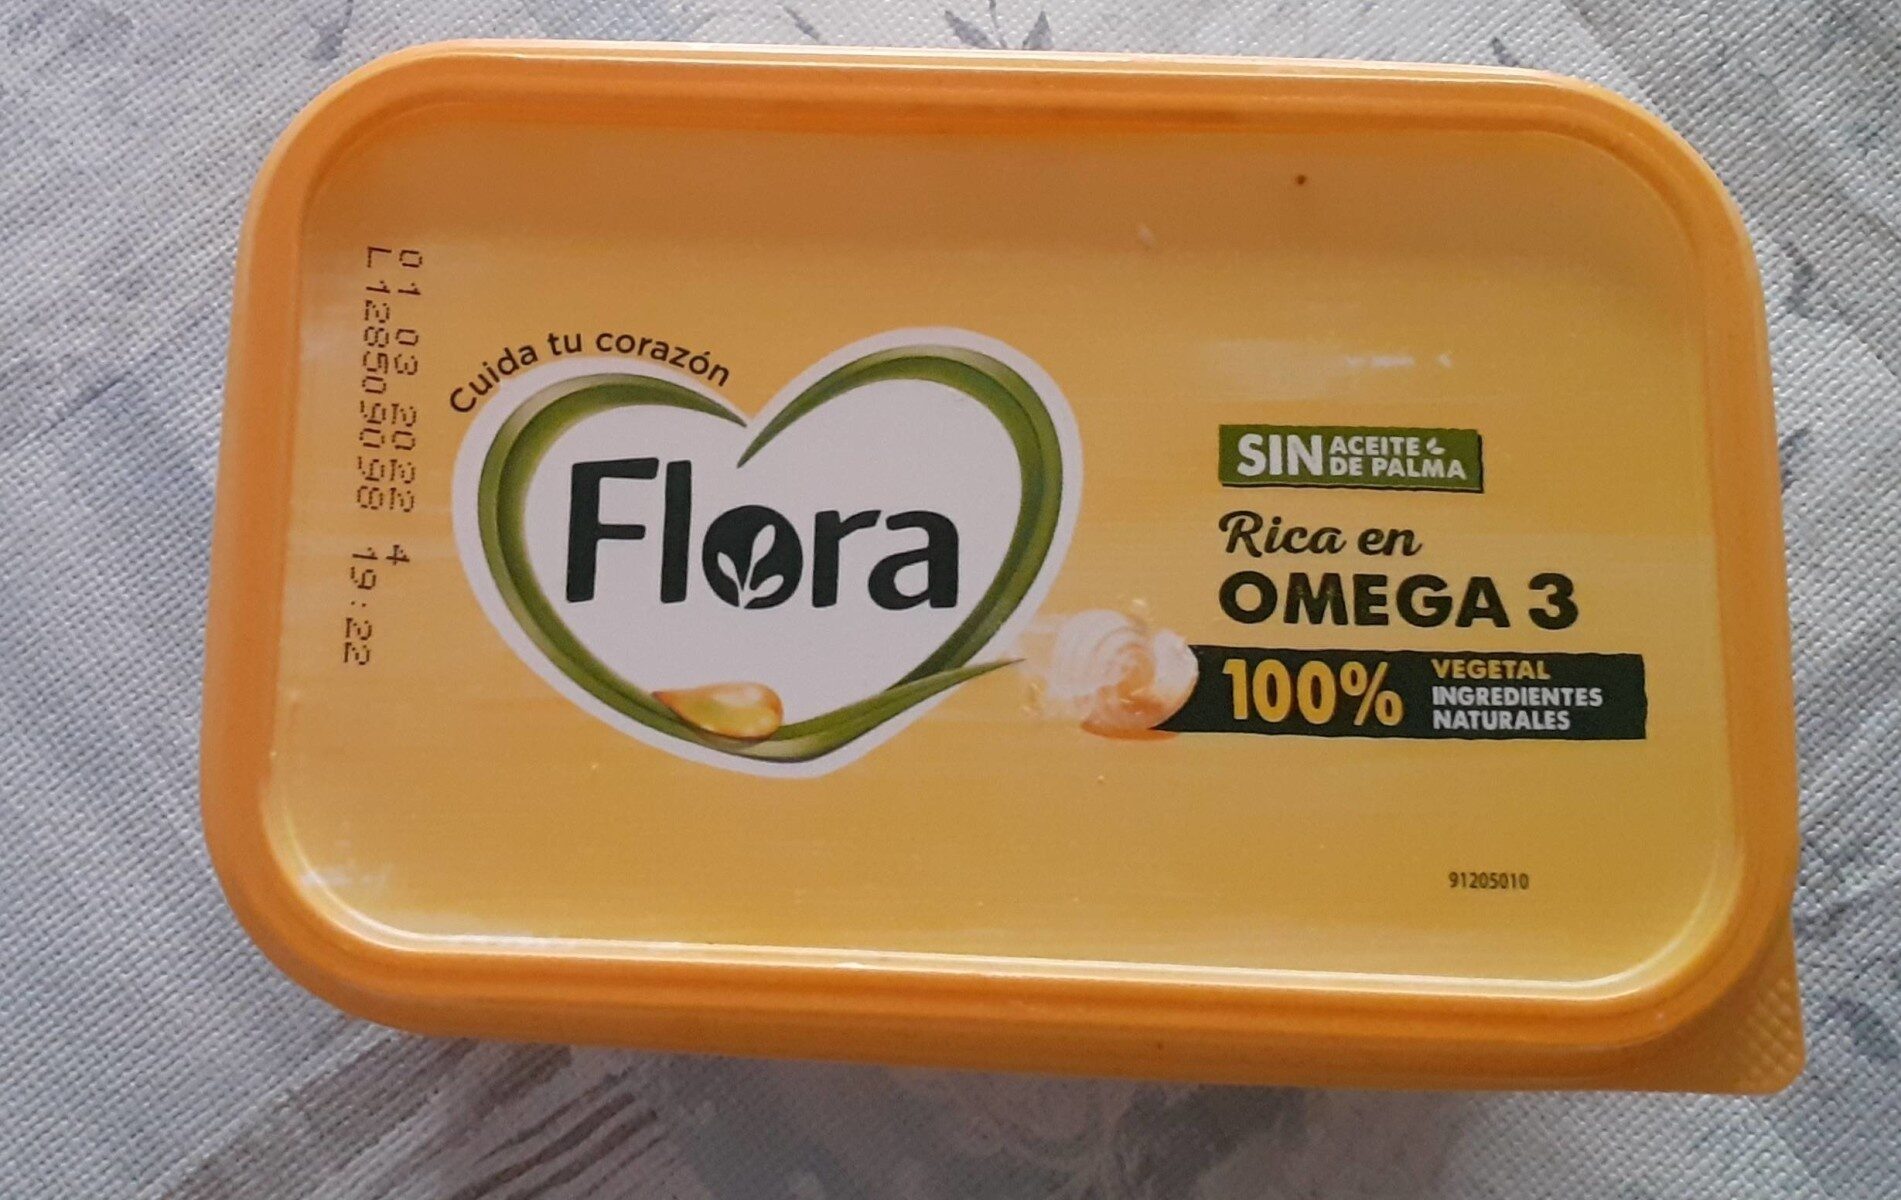 margarina - Product - es